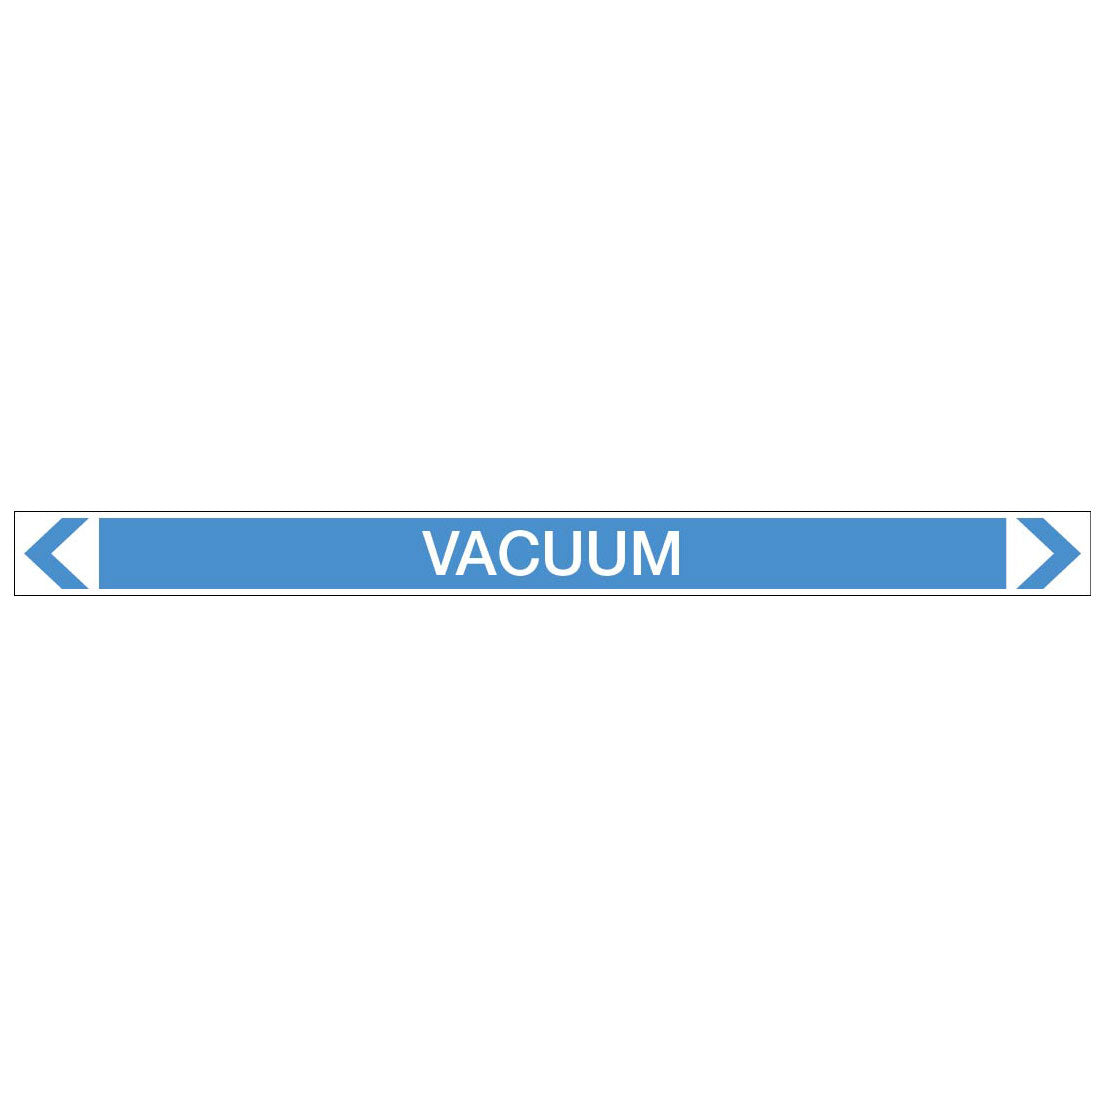 Air - Vacuum - Pipe Marker Sticker